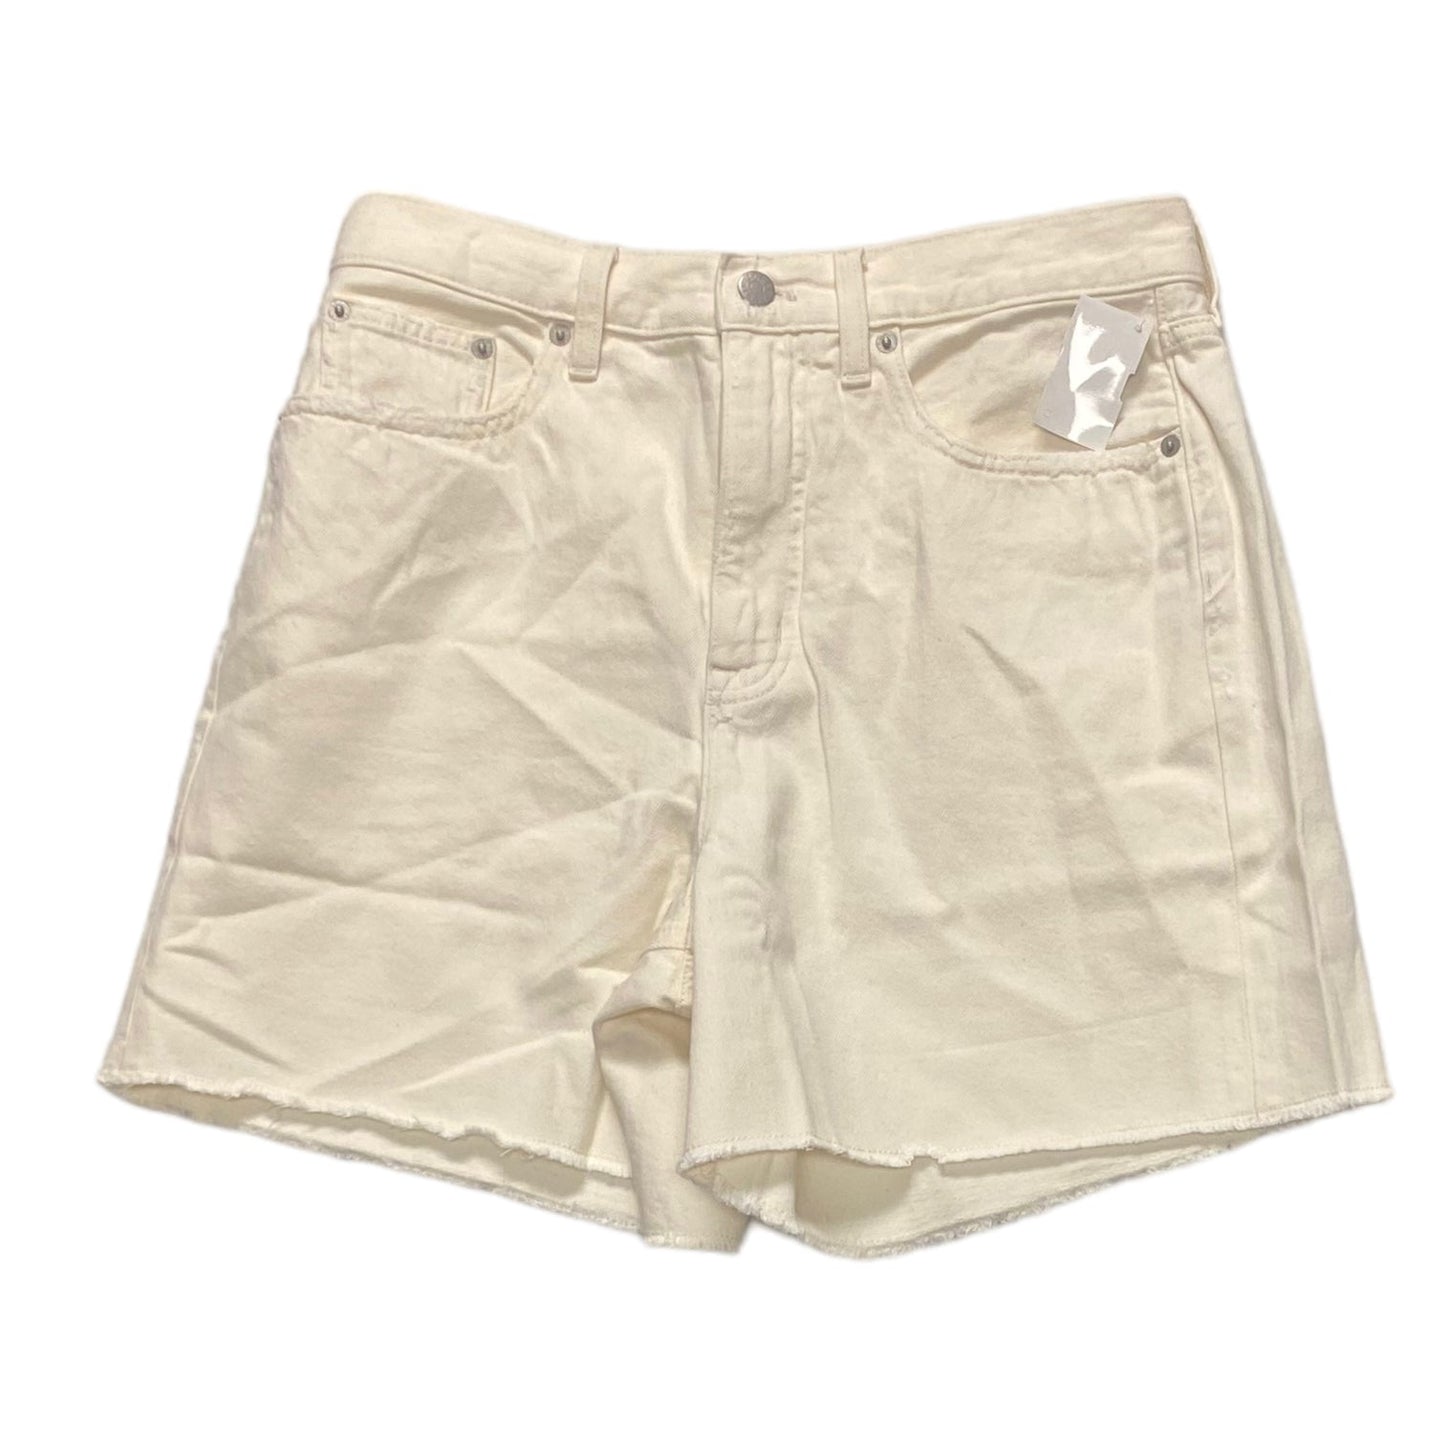 Cream Shorts J. Crew, Size 8